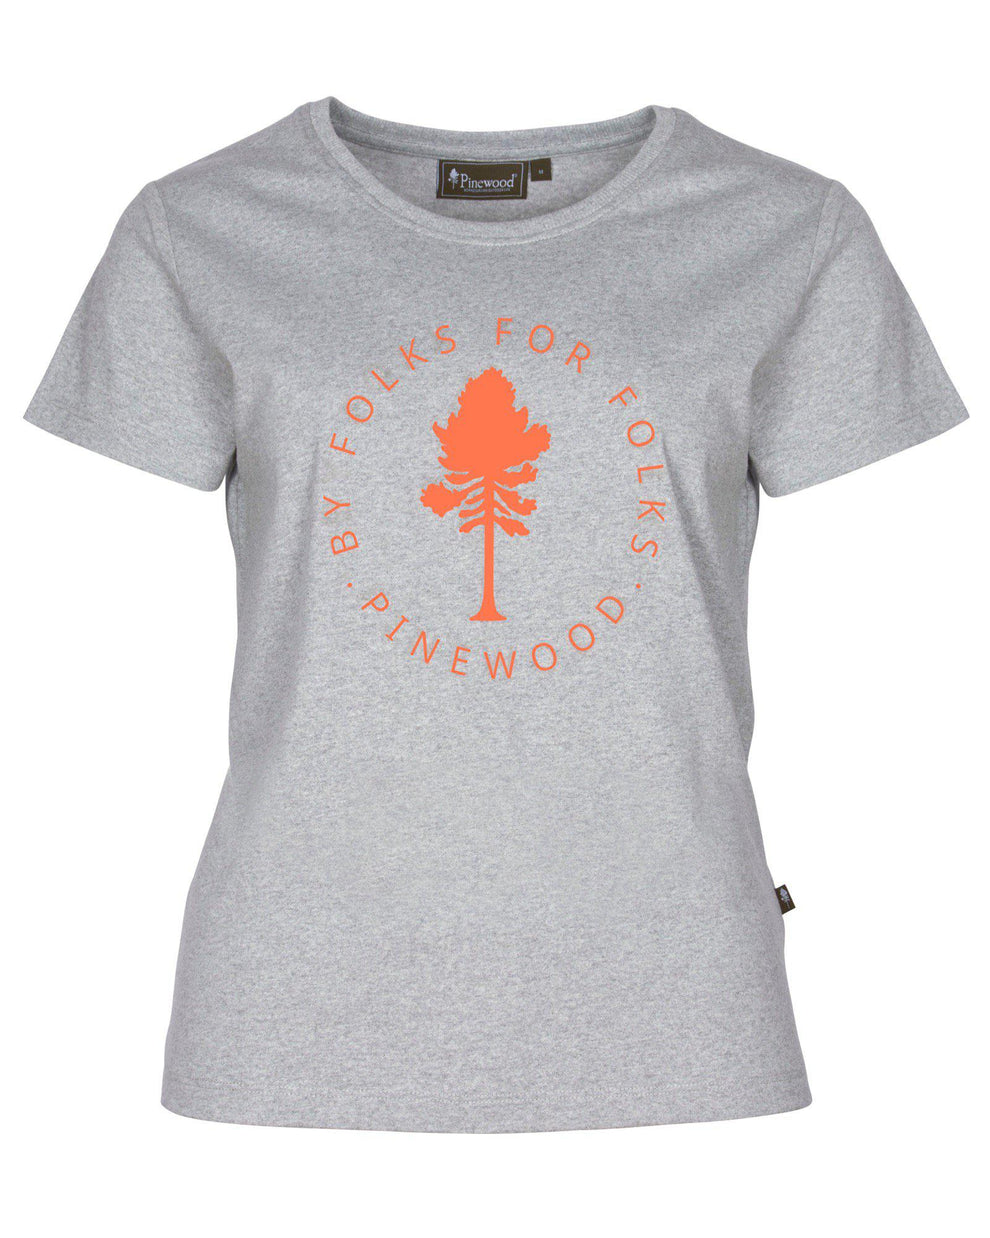 3517-454-01_Pinewood-Tree-T-shirt-Womens_Light-Grey-Melange